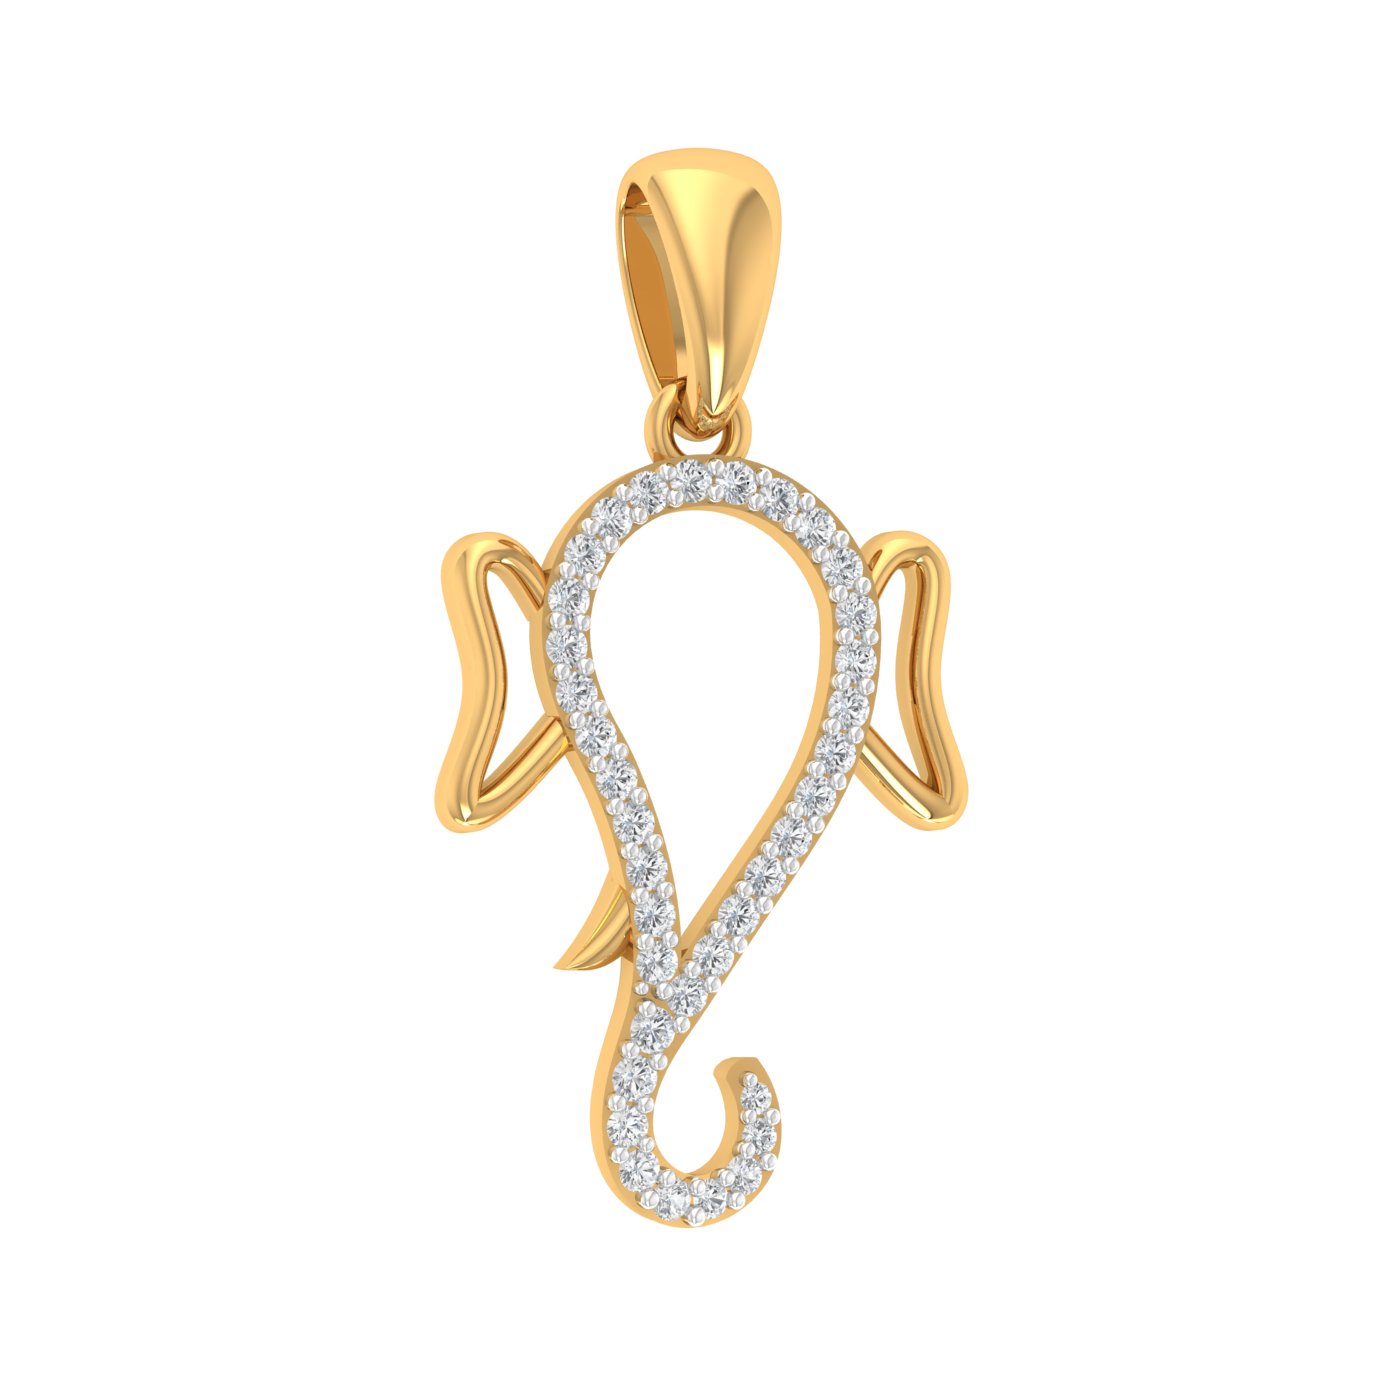 10 Exclusive Lord Ganesha Gold Pendant Designs | lightweight gold pendant